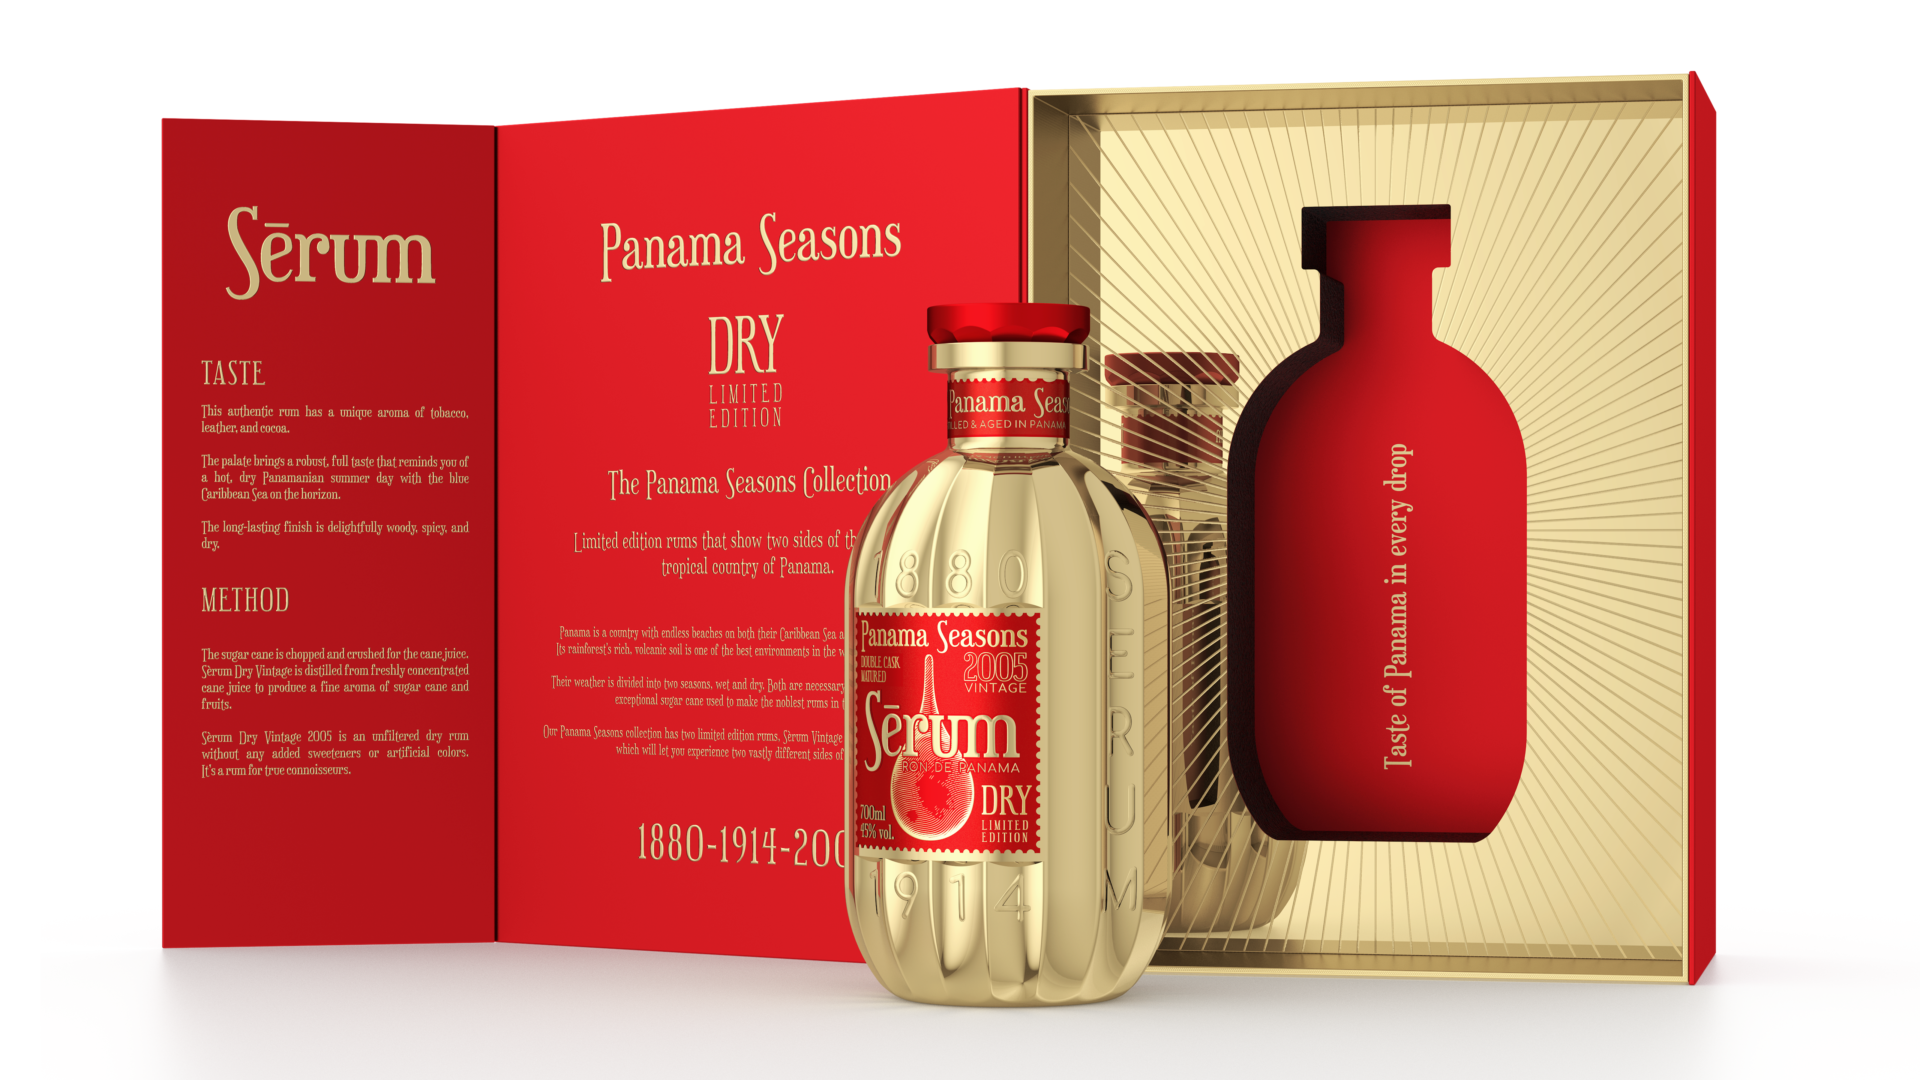 Serum Panama Seasons Dry 2005 45% 0,7l (karton)